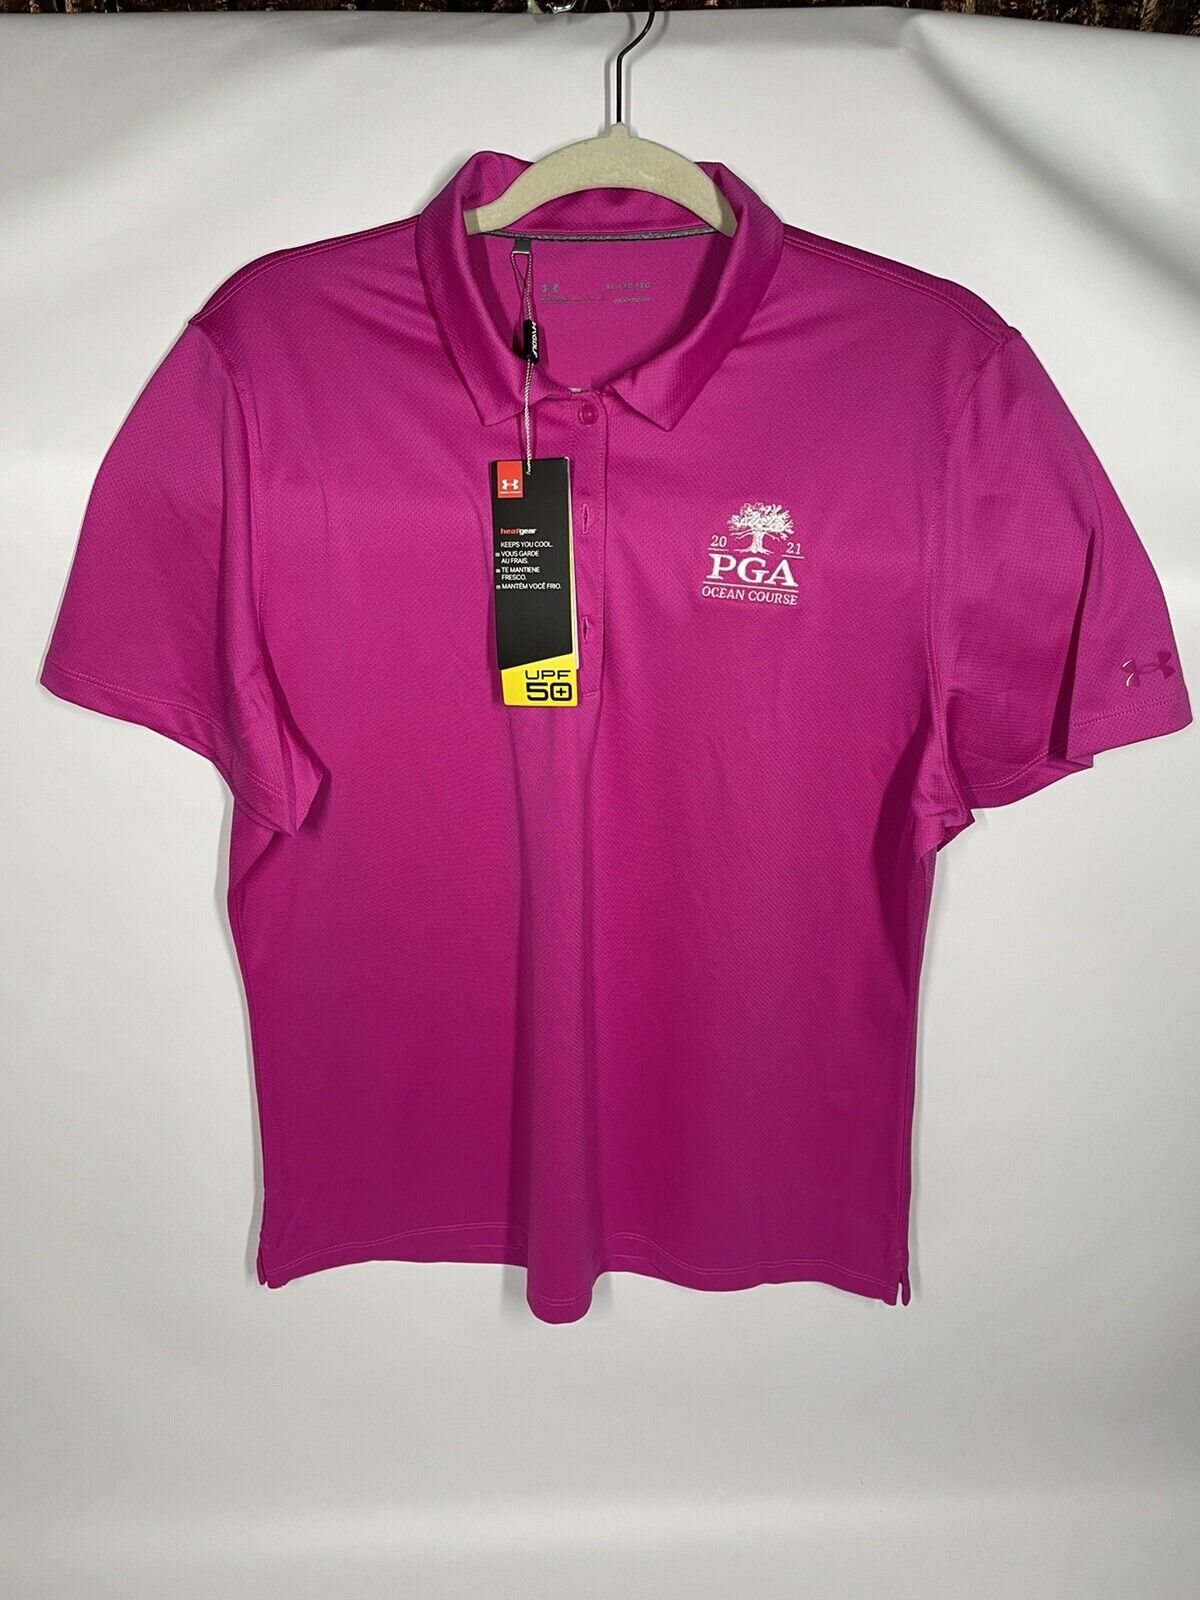 2021 PGA Championship Kiawah Island Womens golf shirt XL. Under Armour